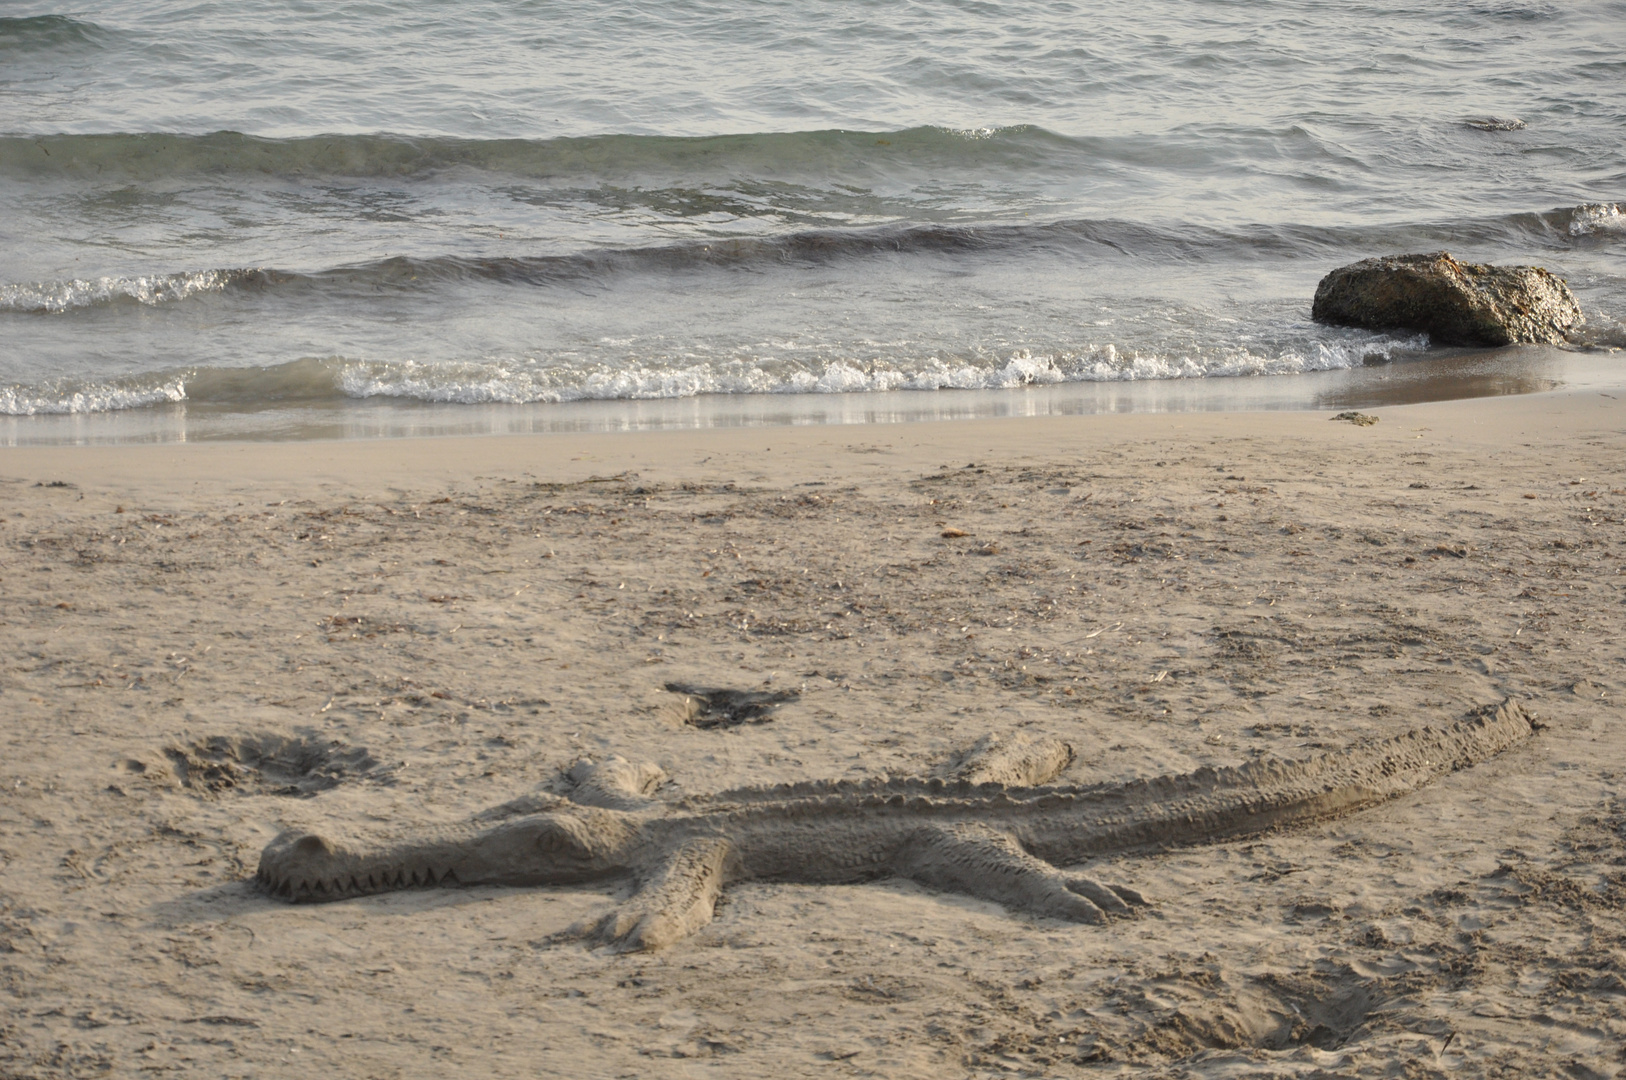 Krokodil am Strand